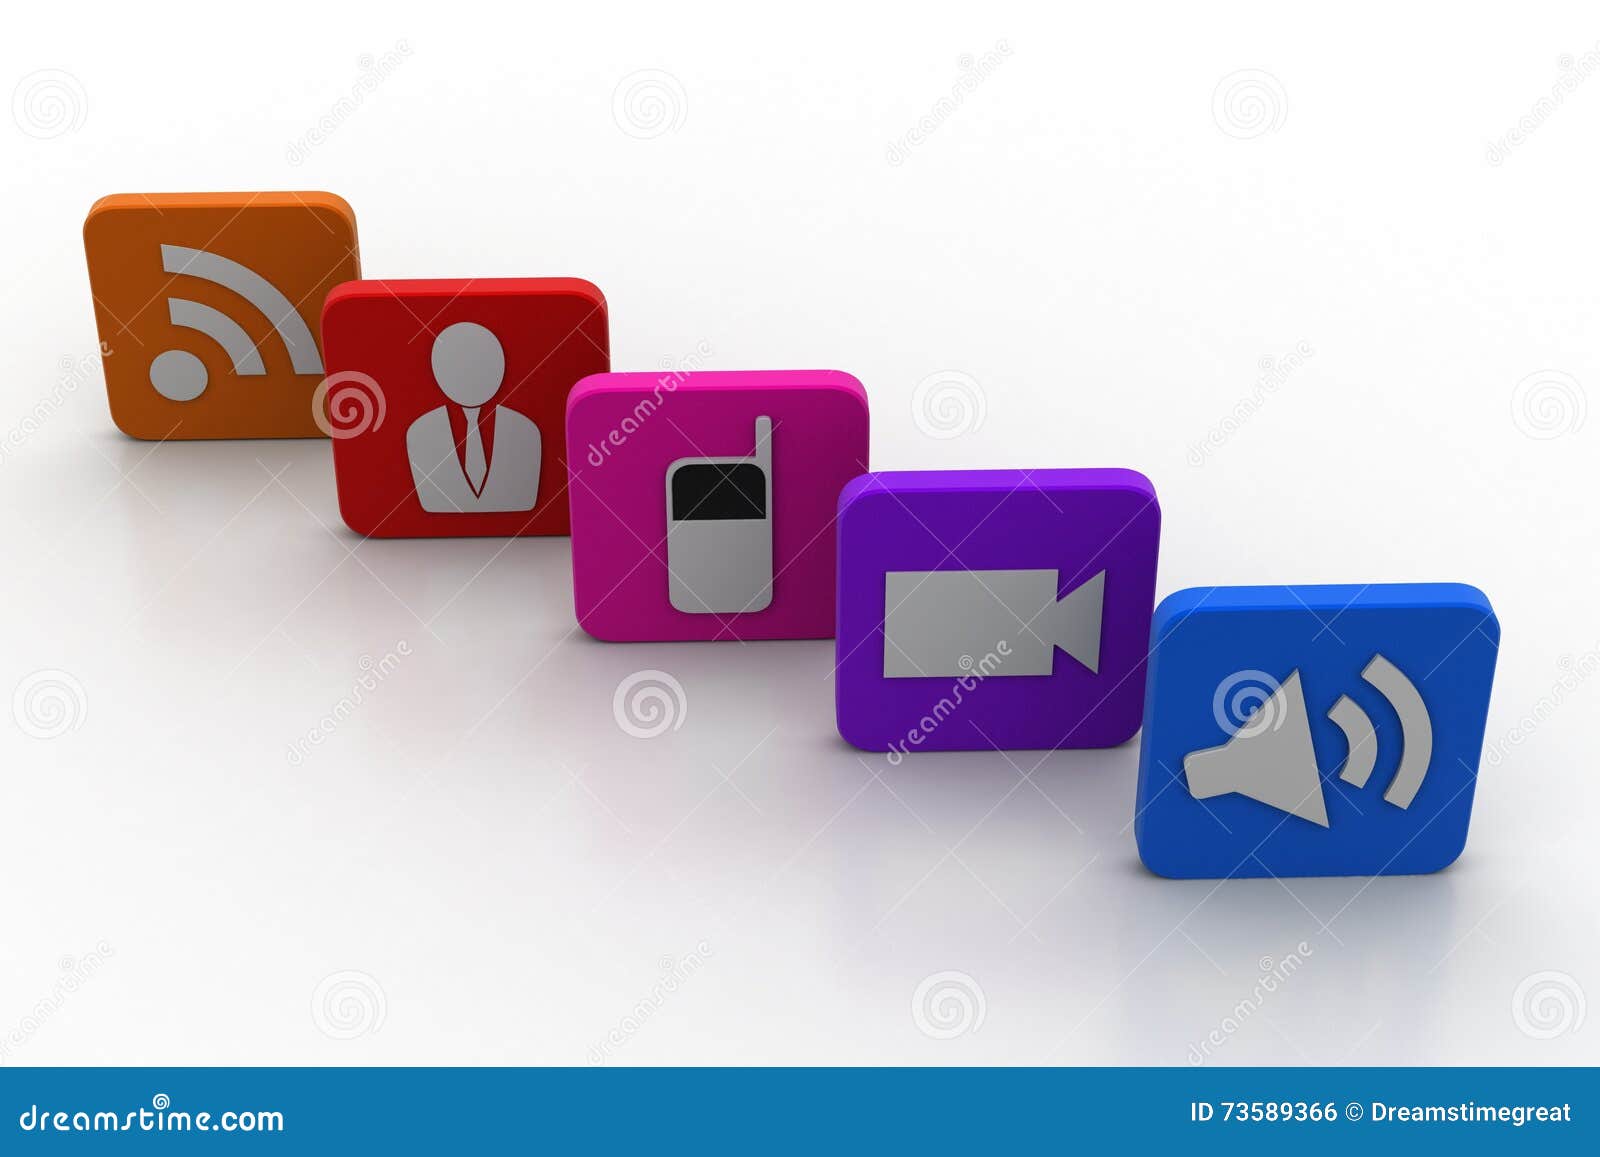 Social media concept stock illustration. Illustration of icons - 73589366